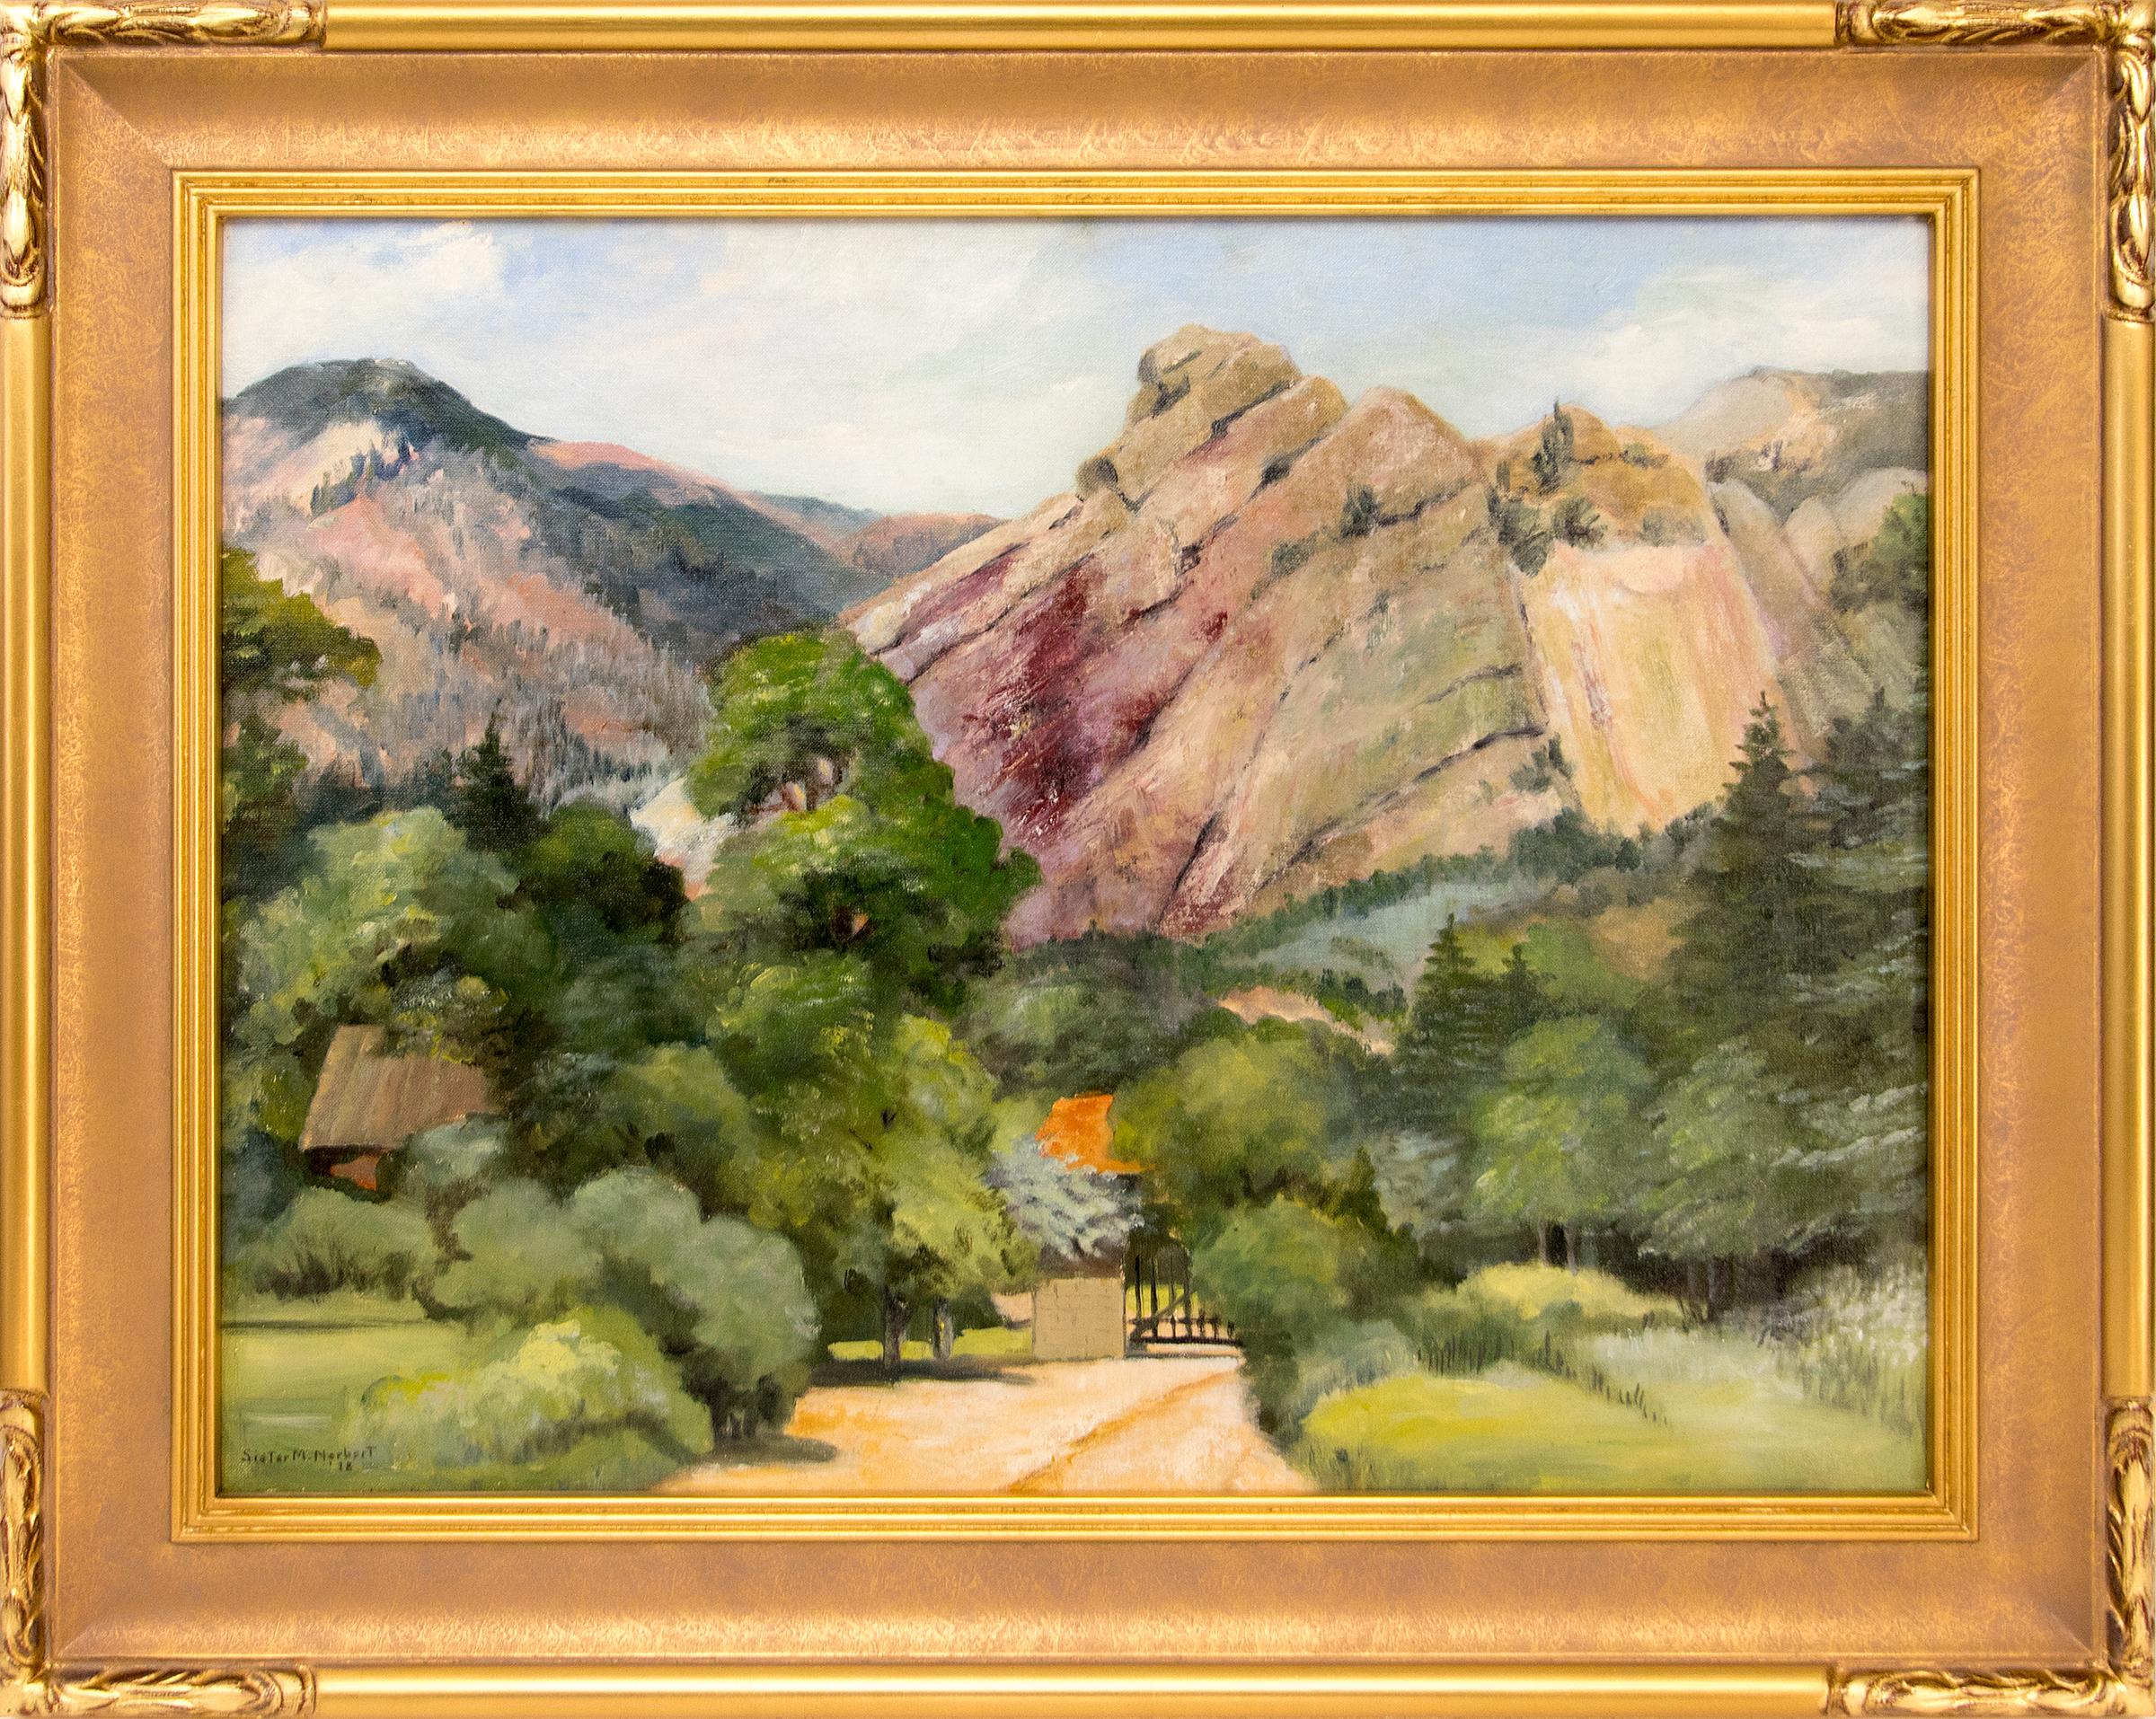 Sommerlandschaft, Ölgemälde, gerahmte Berglandschaft, Felsen, Bäume, Haus, 1930er Jahre – Painting von Sister Mary Norbert